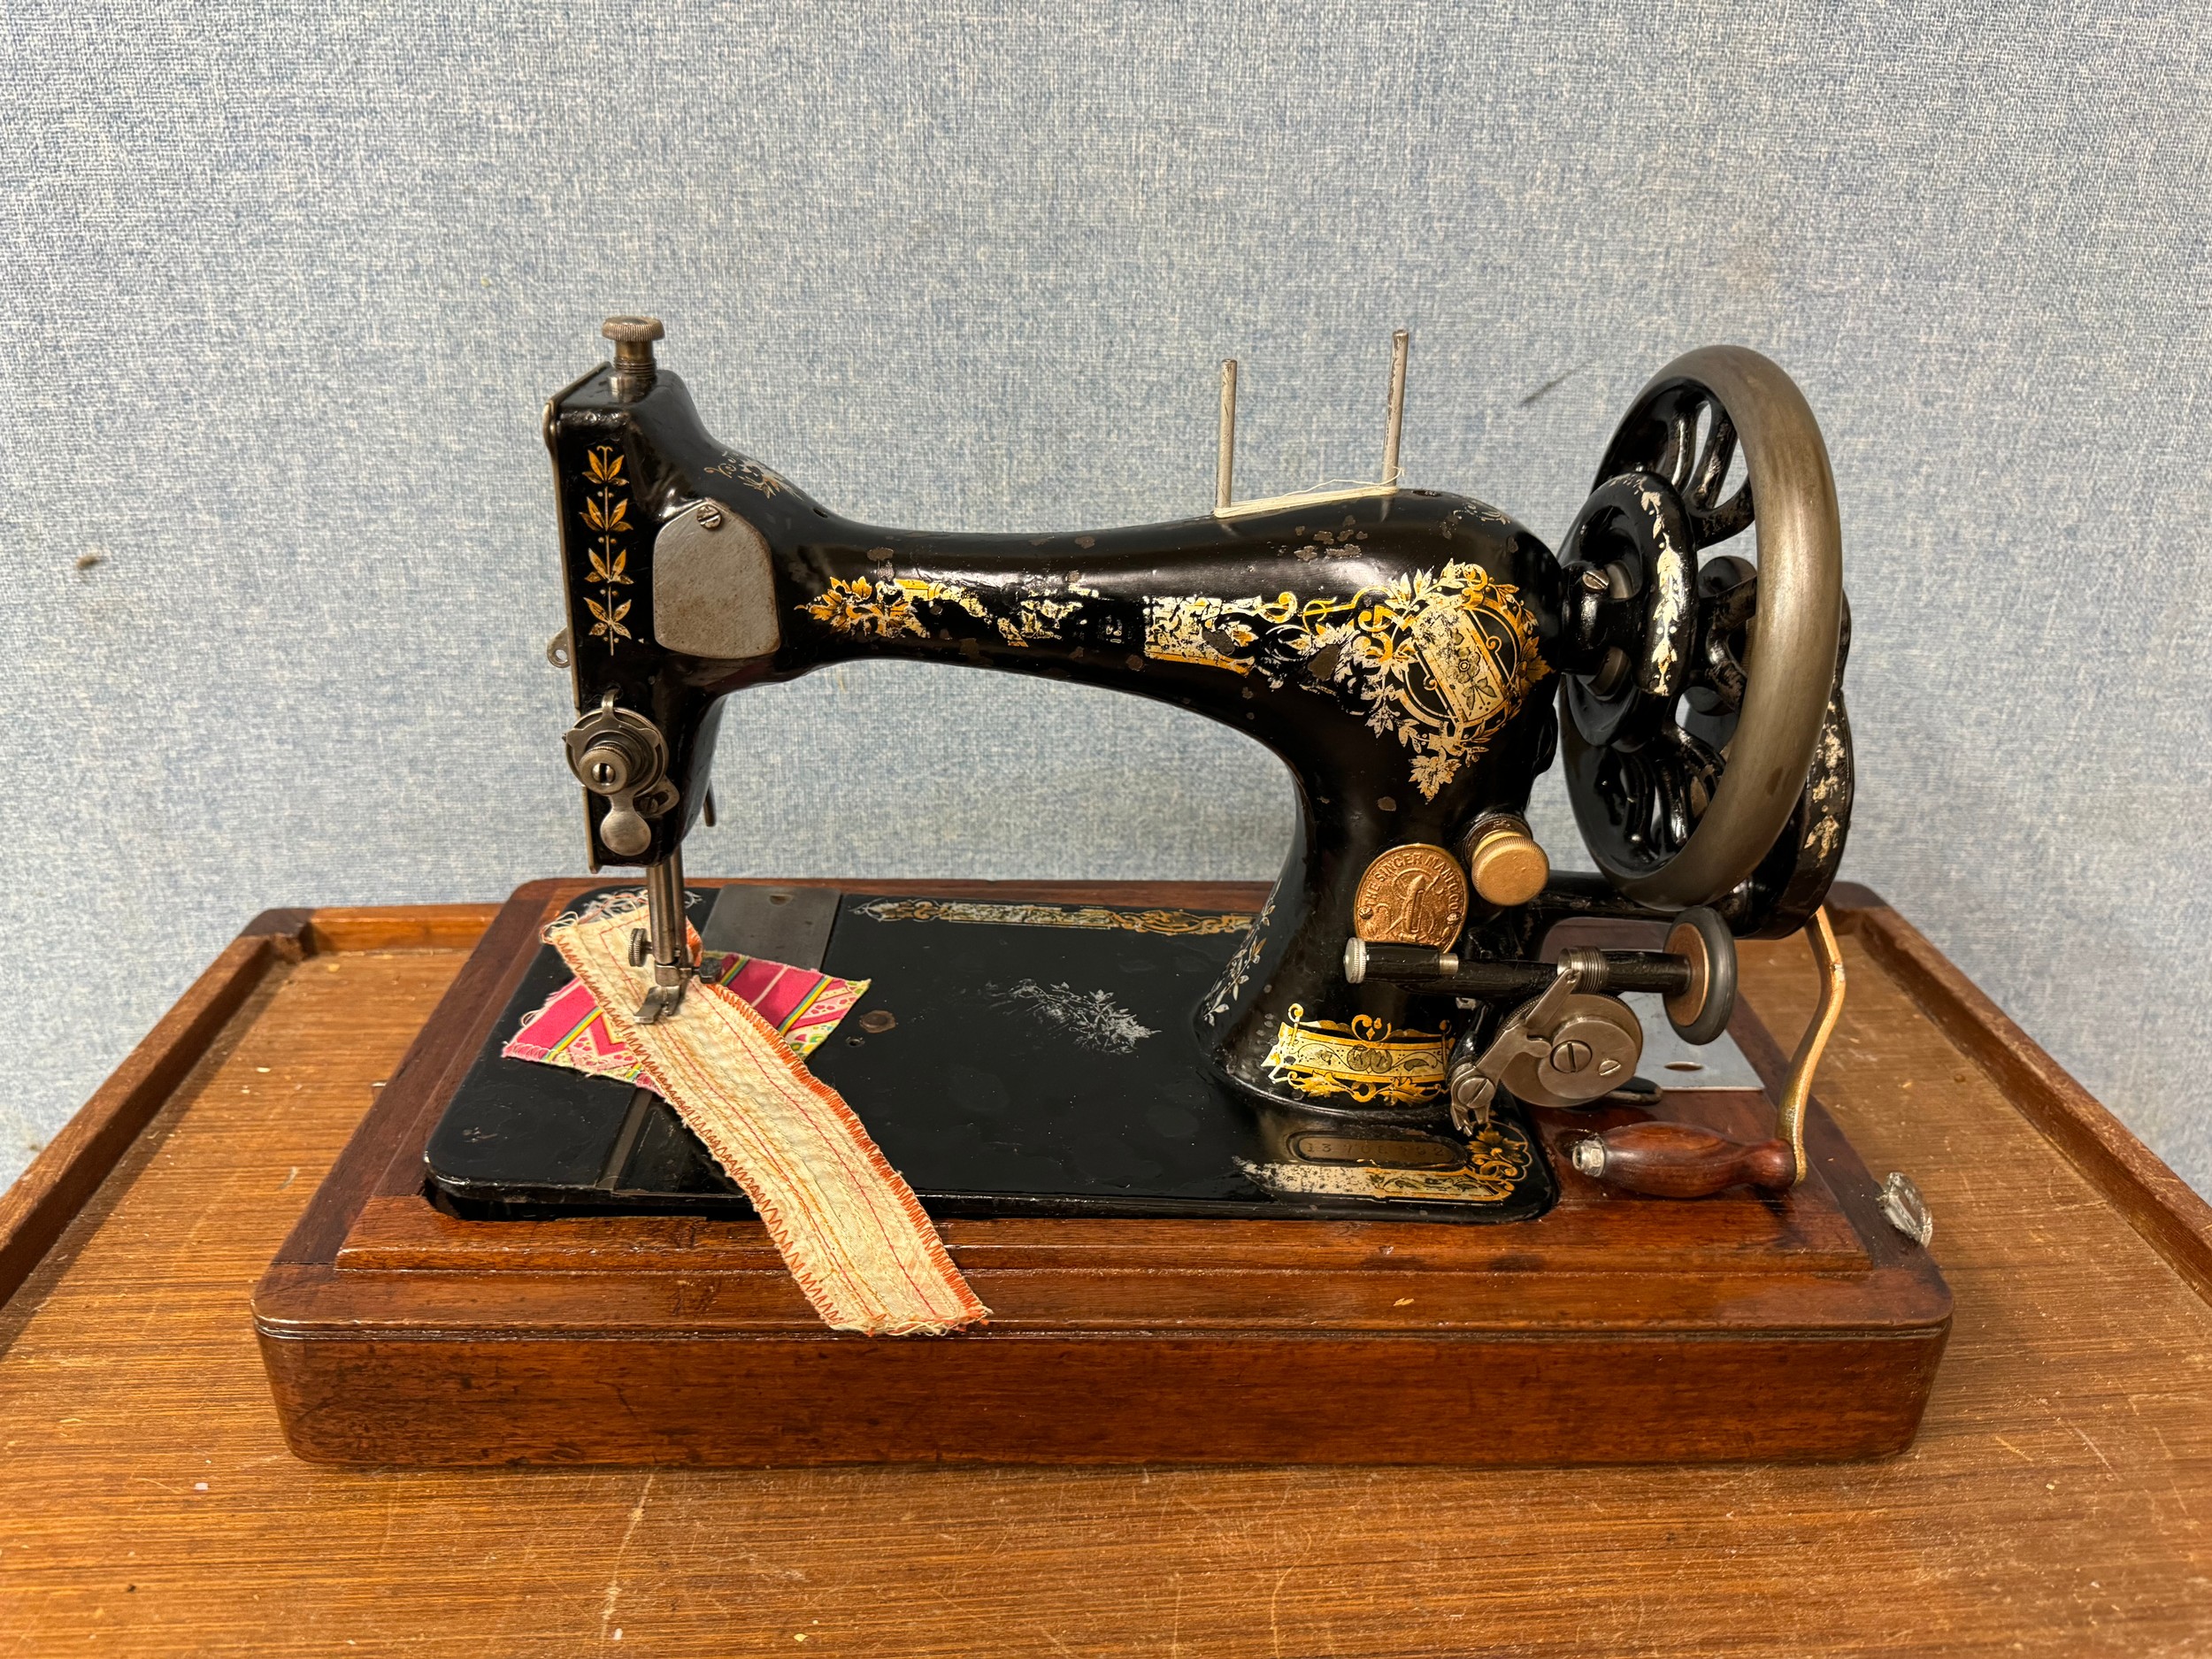 A cased sewing machine